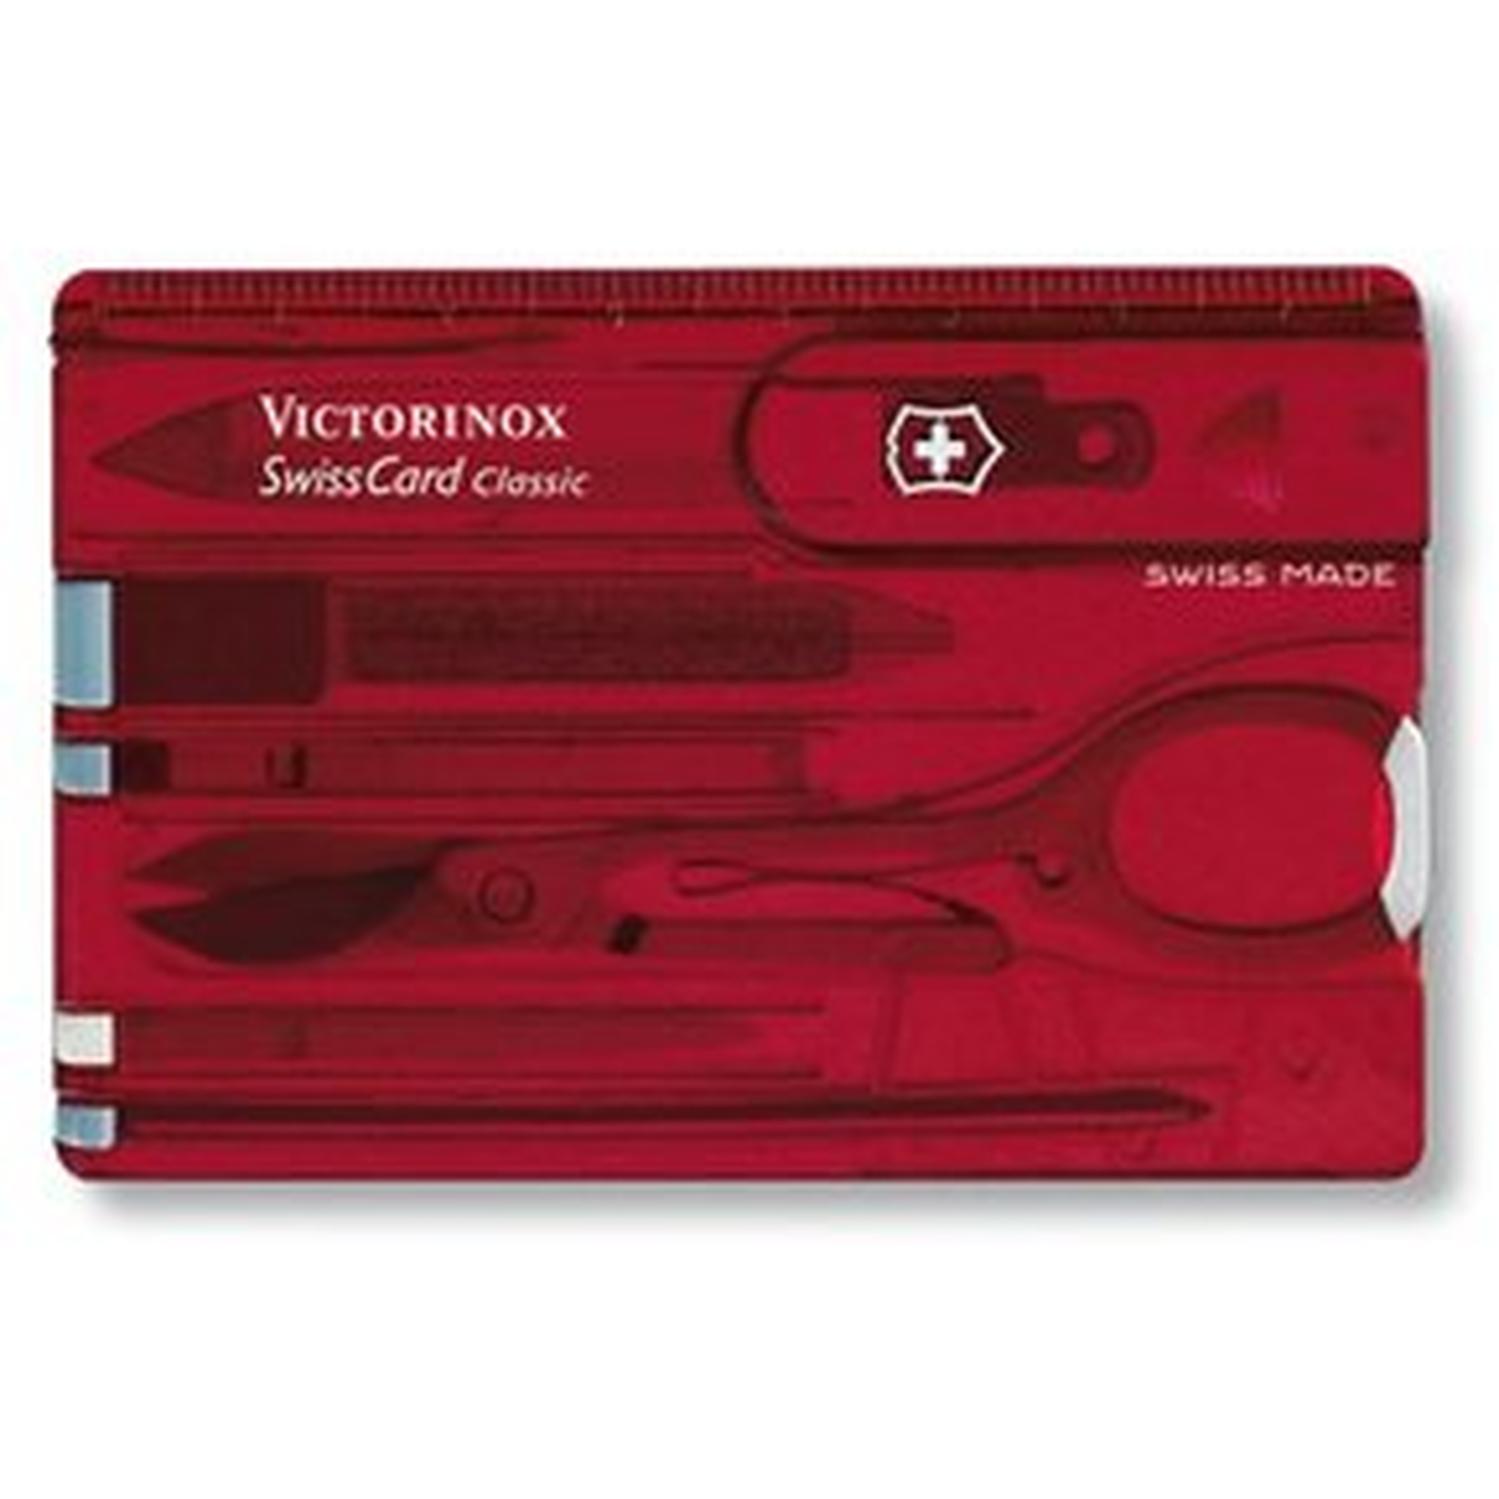 SwissCard Classic Victorinox Rojo